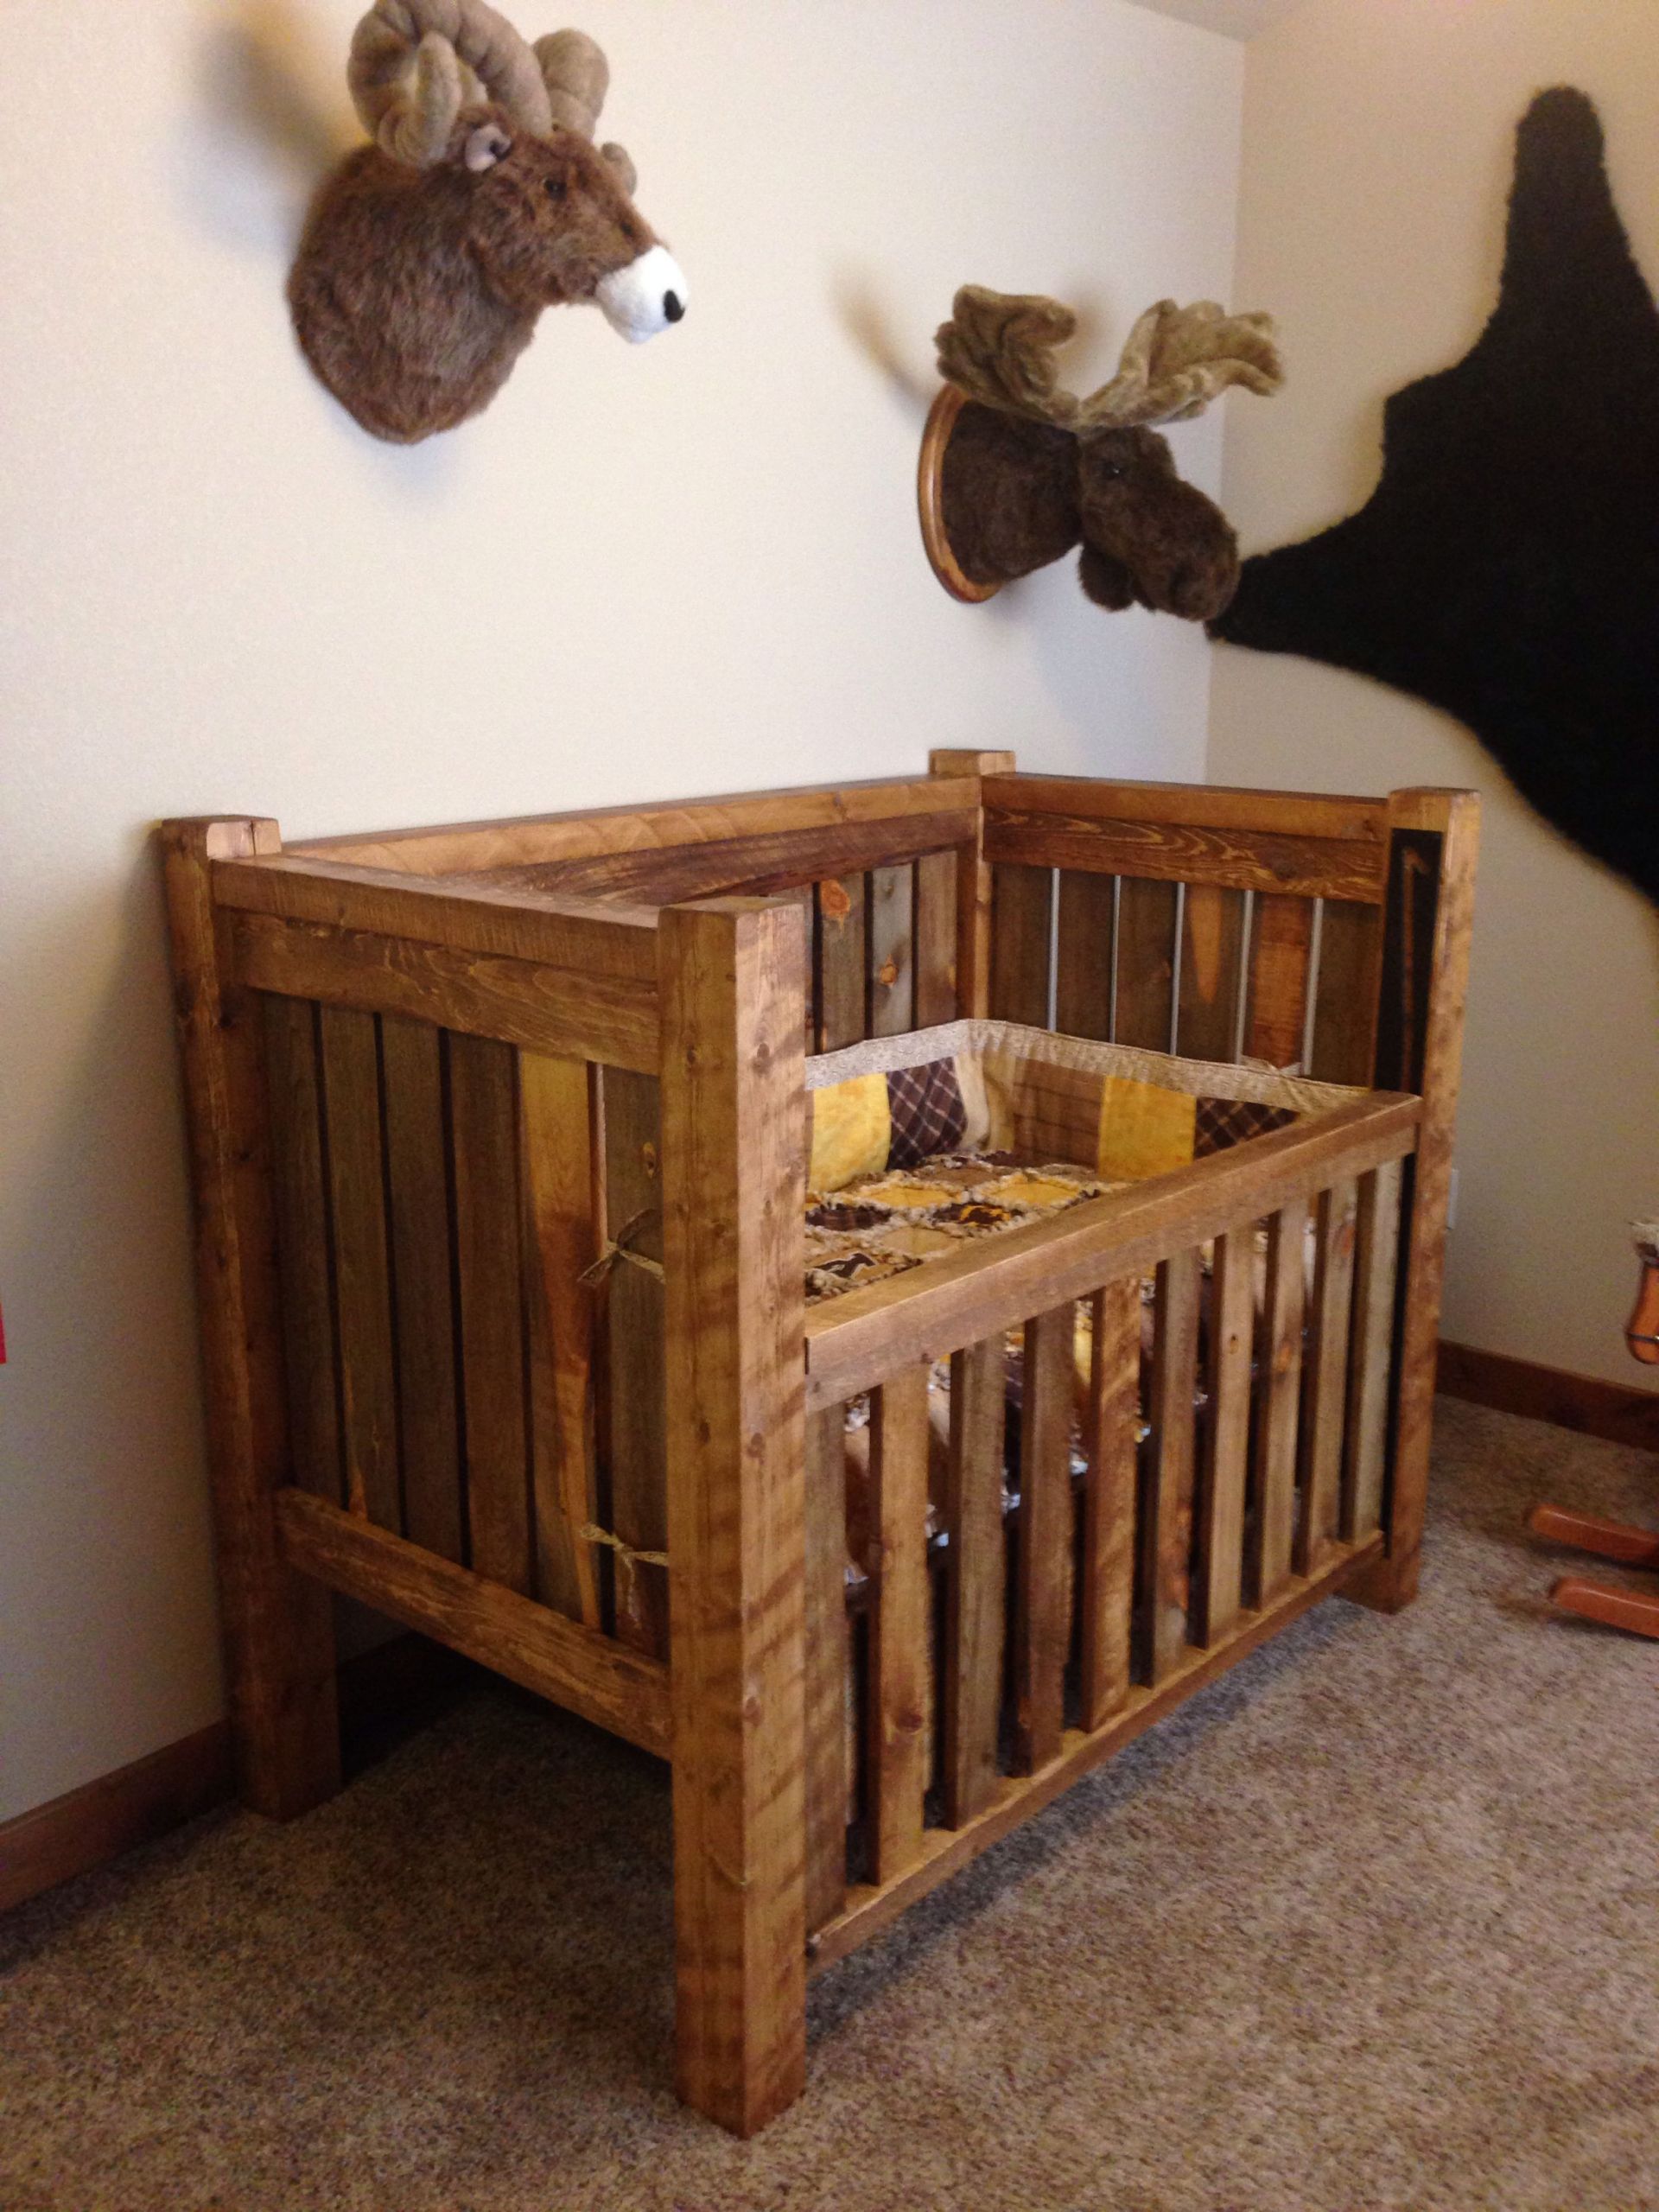 DIY Baby Crib Ideas
 Rustic baby crib and hunting lodge bedroom